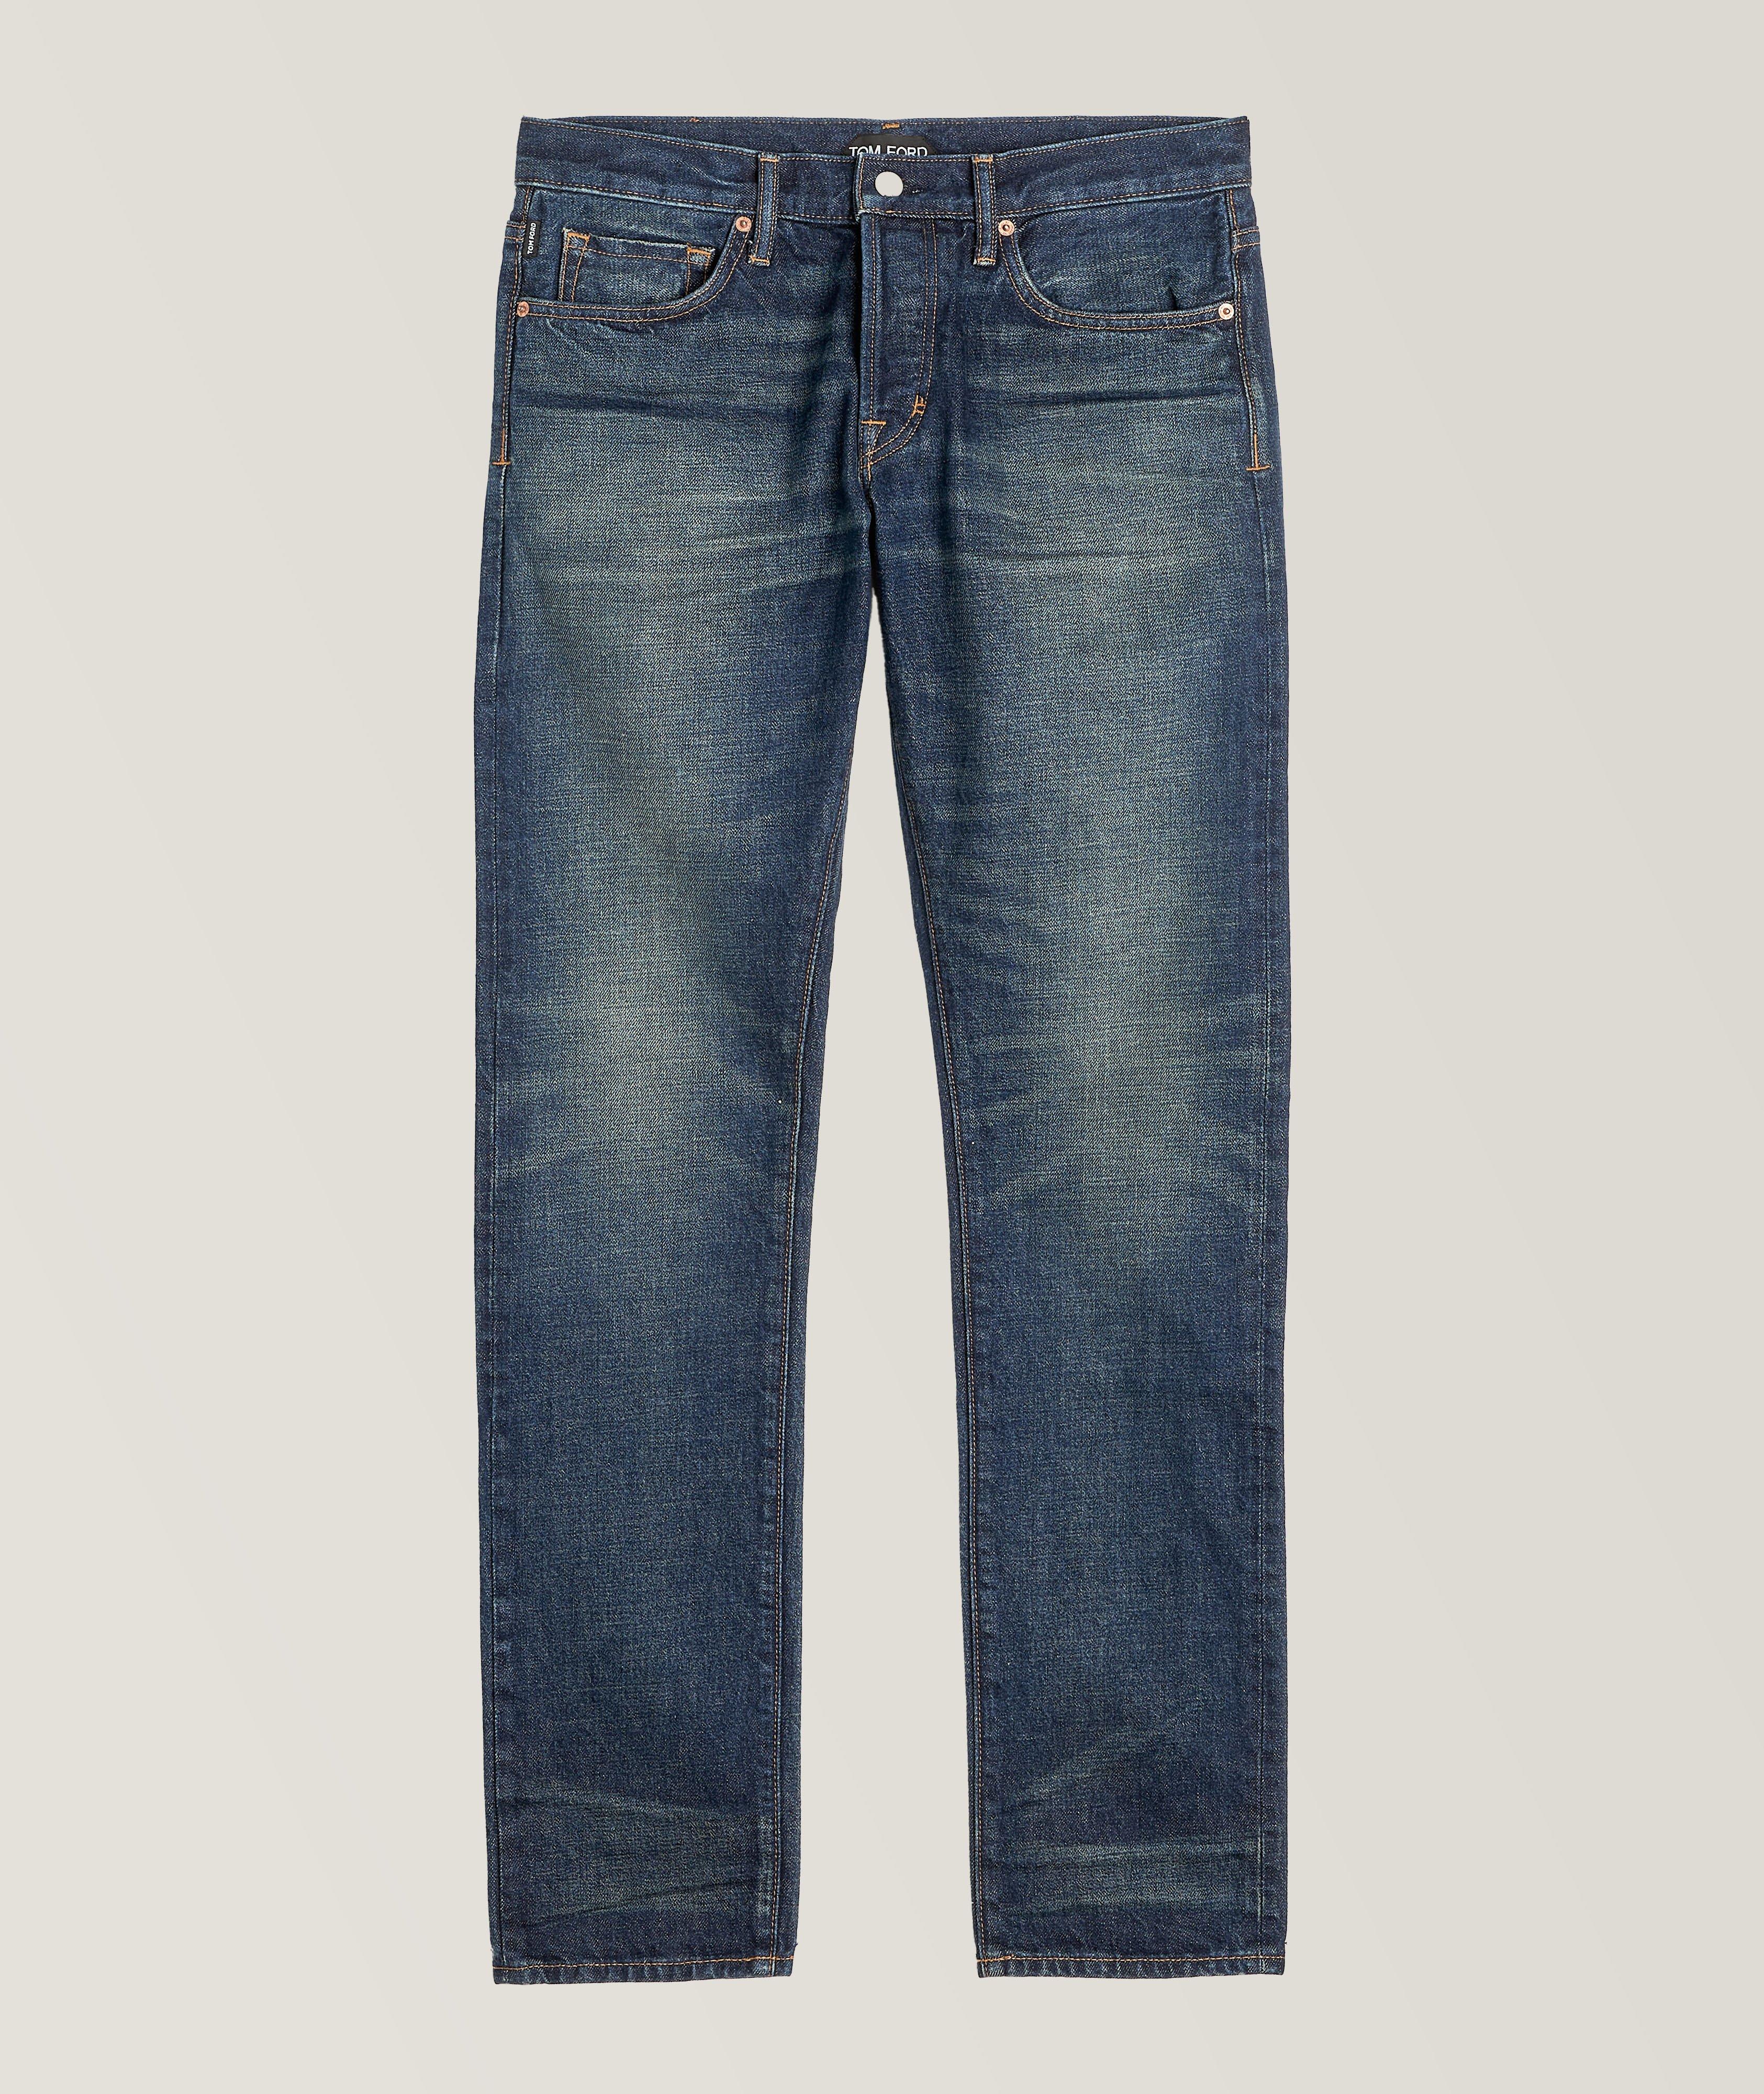 Slim-Fit Selvedge Cotton Jeans image 0